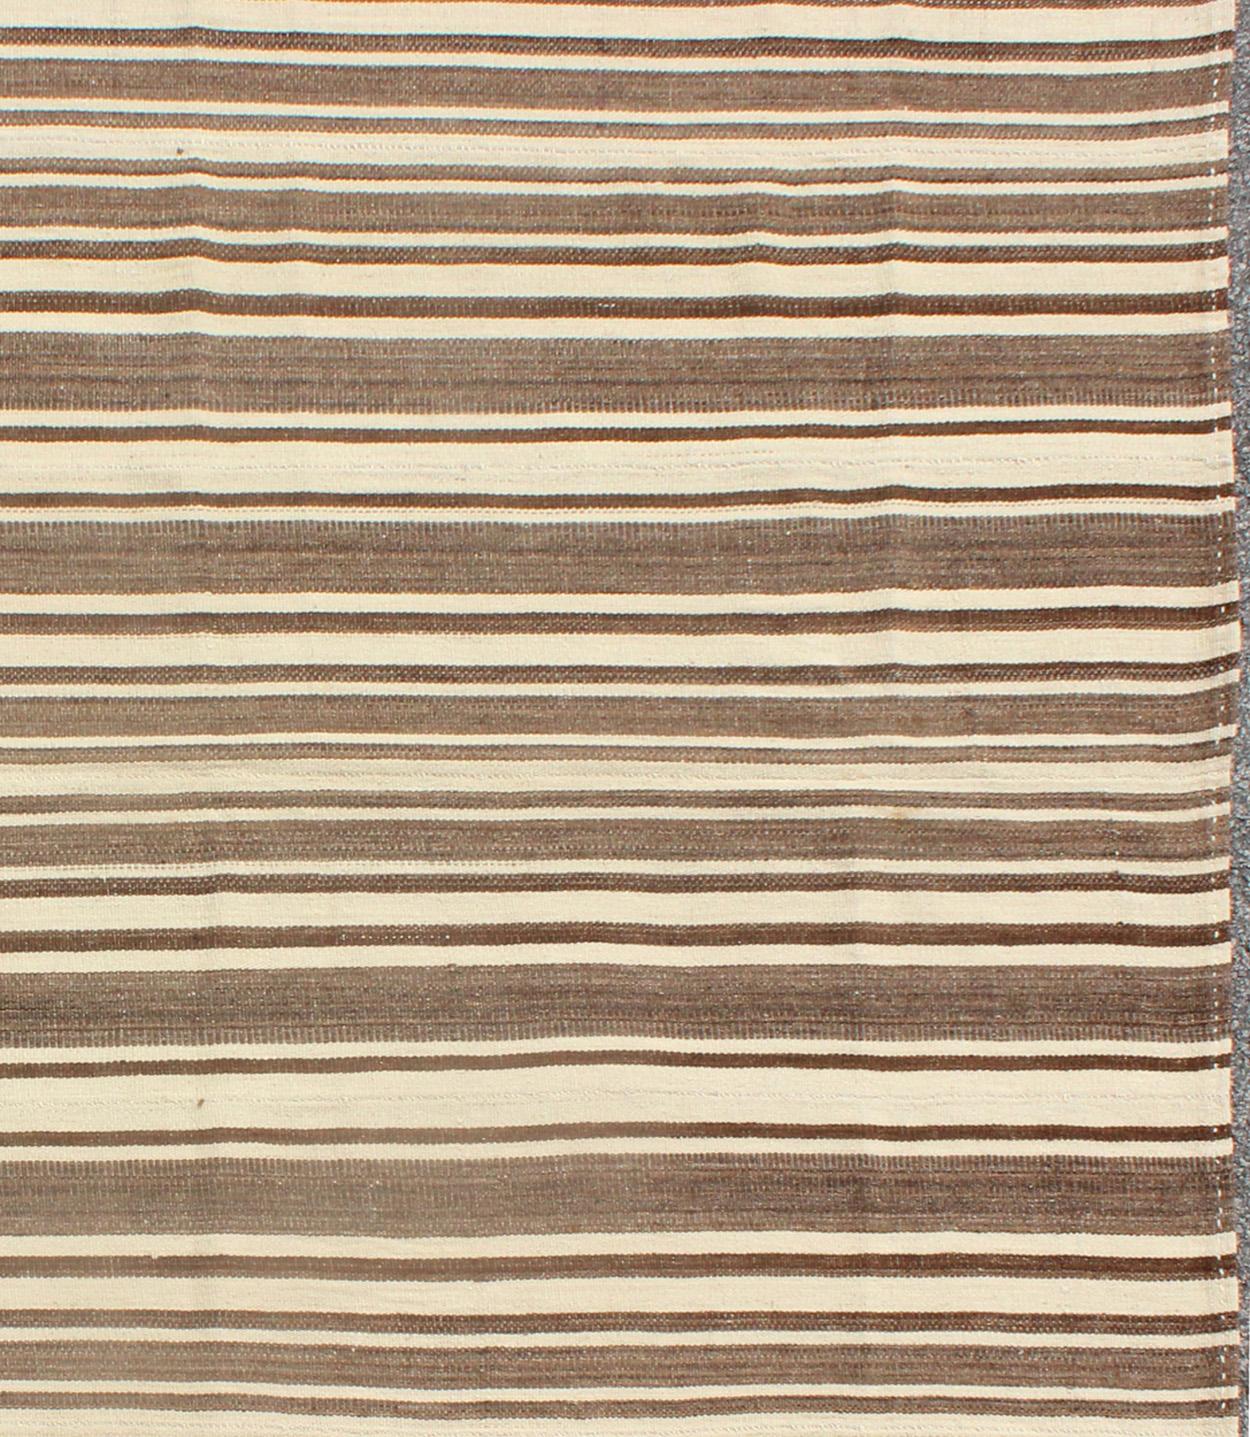 Minimalist design Stripe vintage Kilim from Turkey, rug TU-NED-4724, country of origin / type: Turkey / Kilim, circa 1950

Measures: 6 x 6'7 

This vintage flat-woven Kilim features a minimalist design rendered in thin brown, light blue,